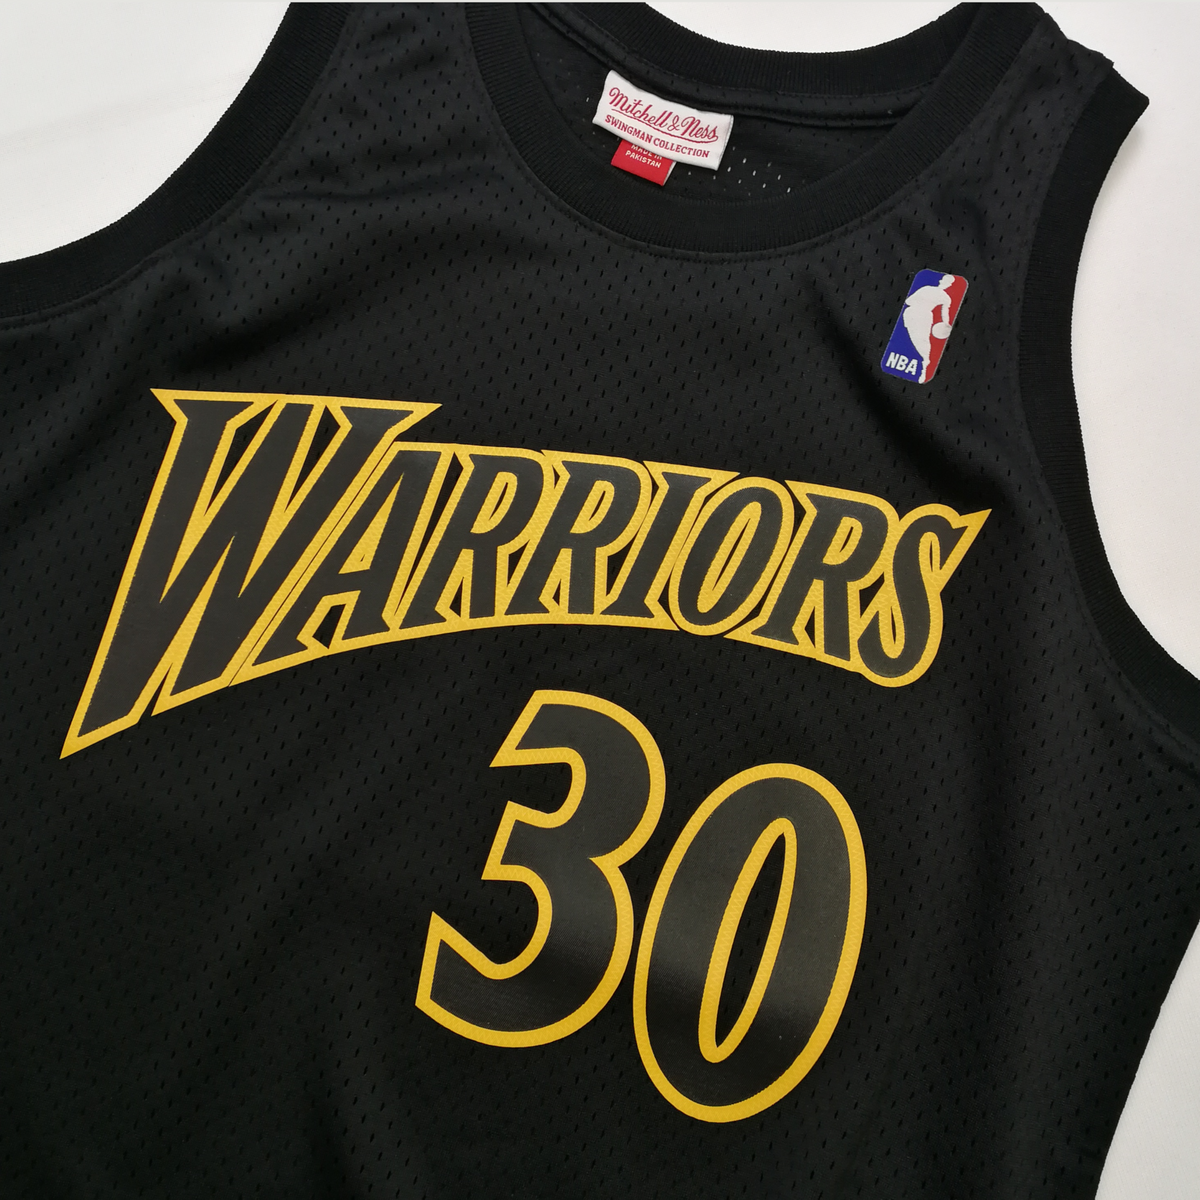 Stephen Curry Apparel, Stephen Curry Golden State Warriors Jerseys